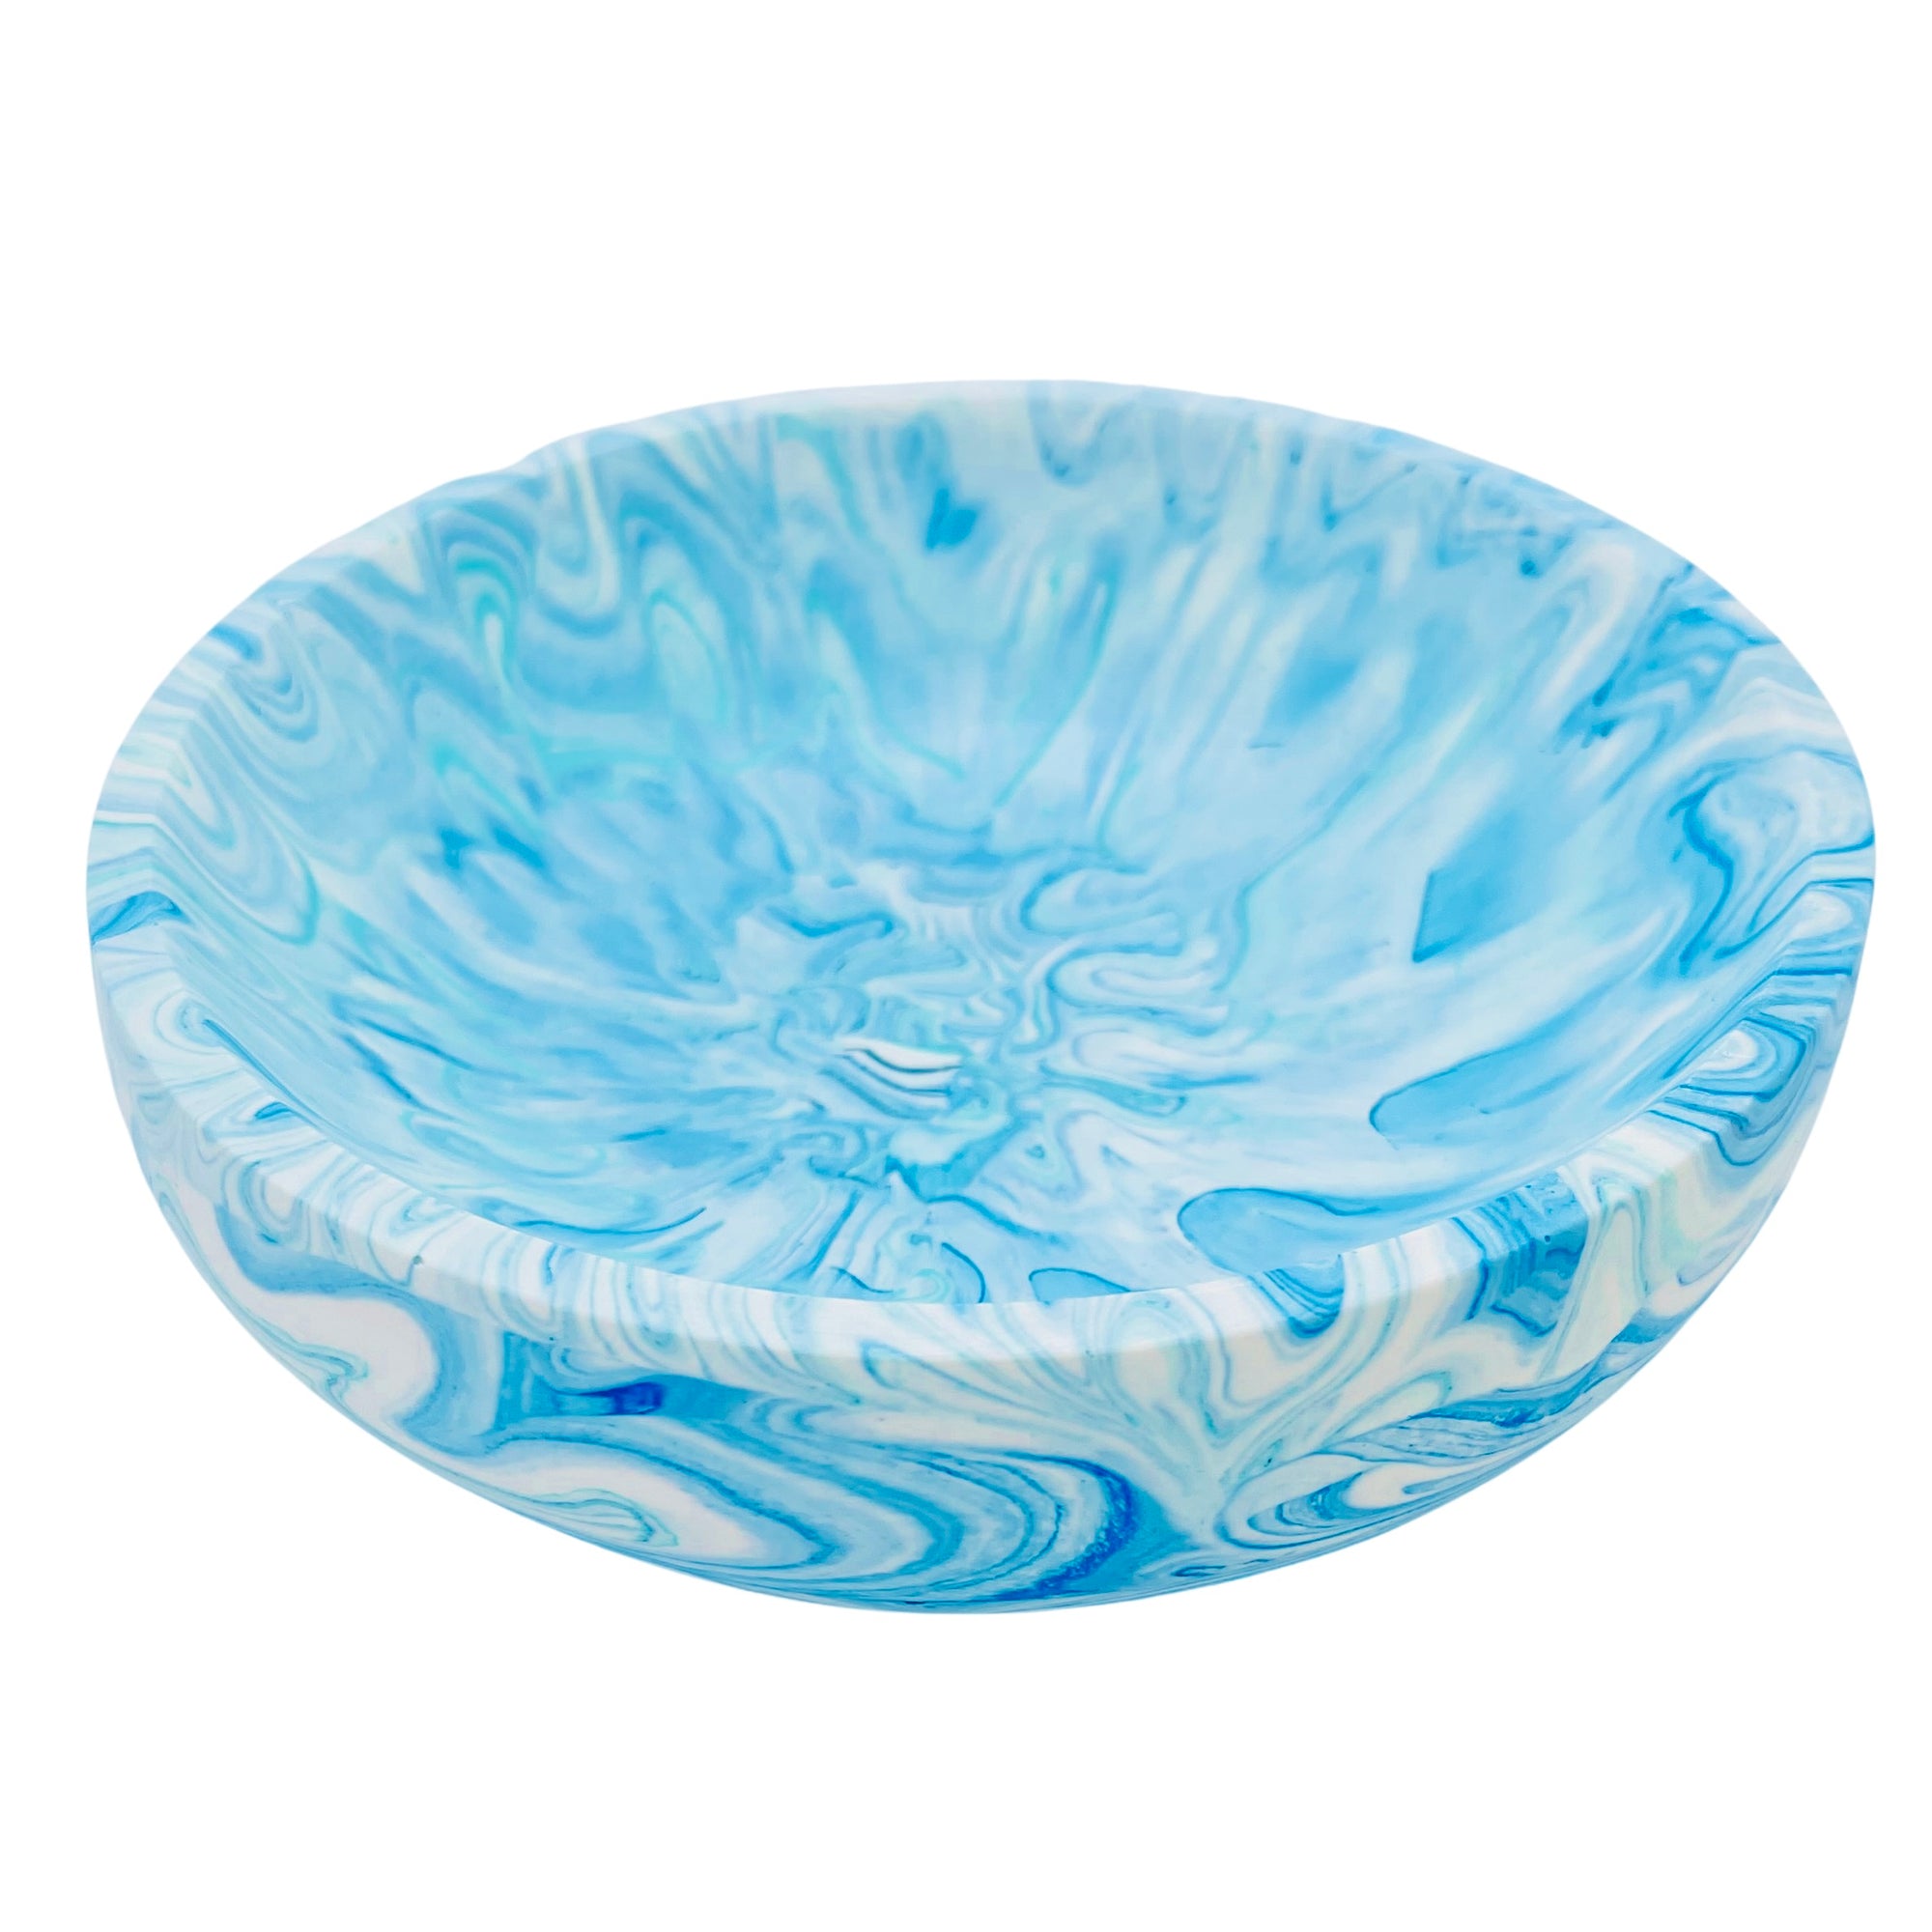 A shallow medium size Jesmonite bowl marbled with magenta pigment.